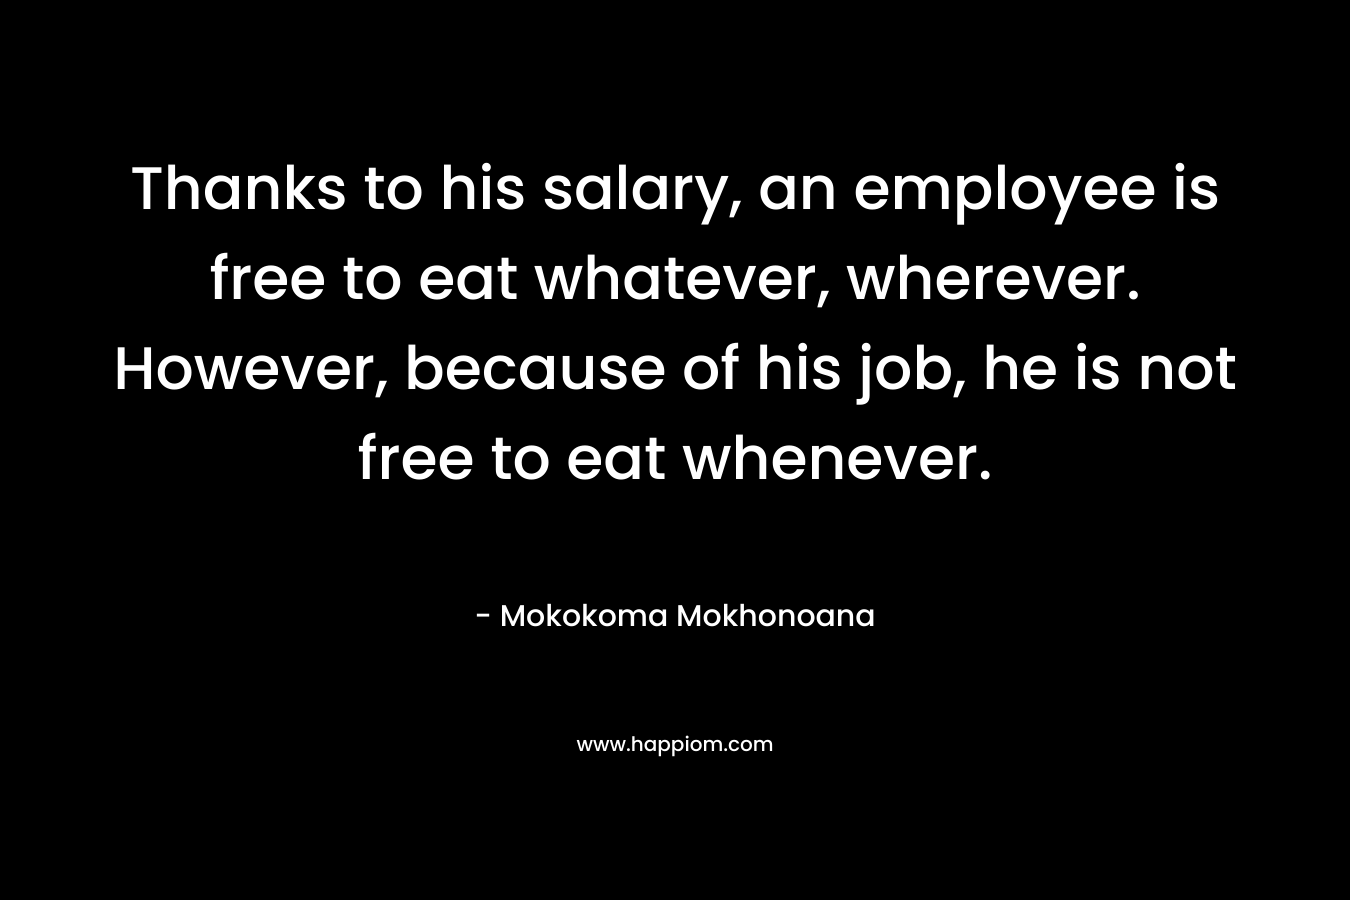 Thanks to his salary, an employee is free to eat whatever, wherever. However, because of his job, he is not free to eat whenever. – Mokokoma Mokhonoana